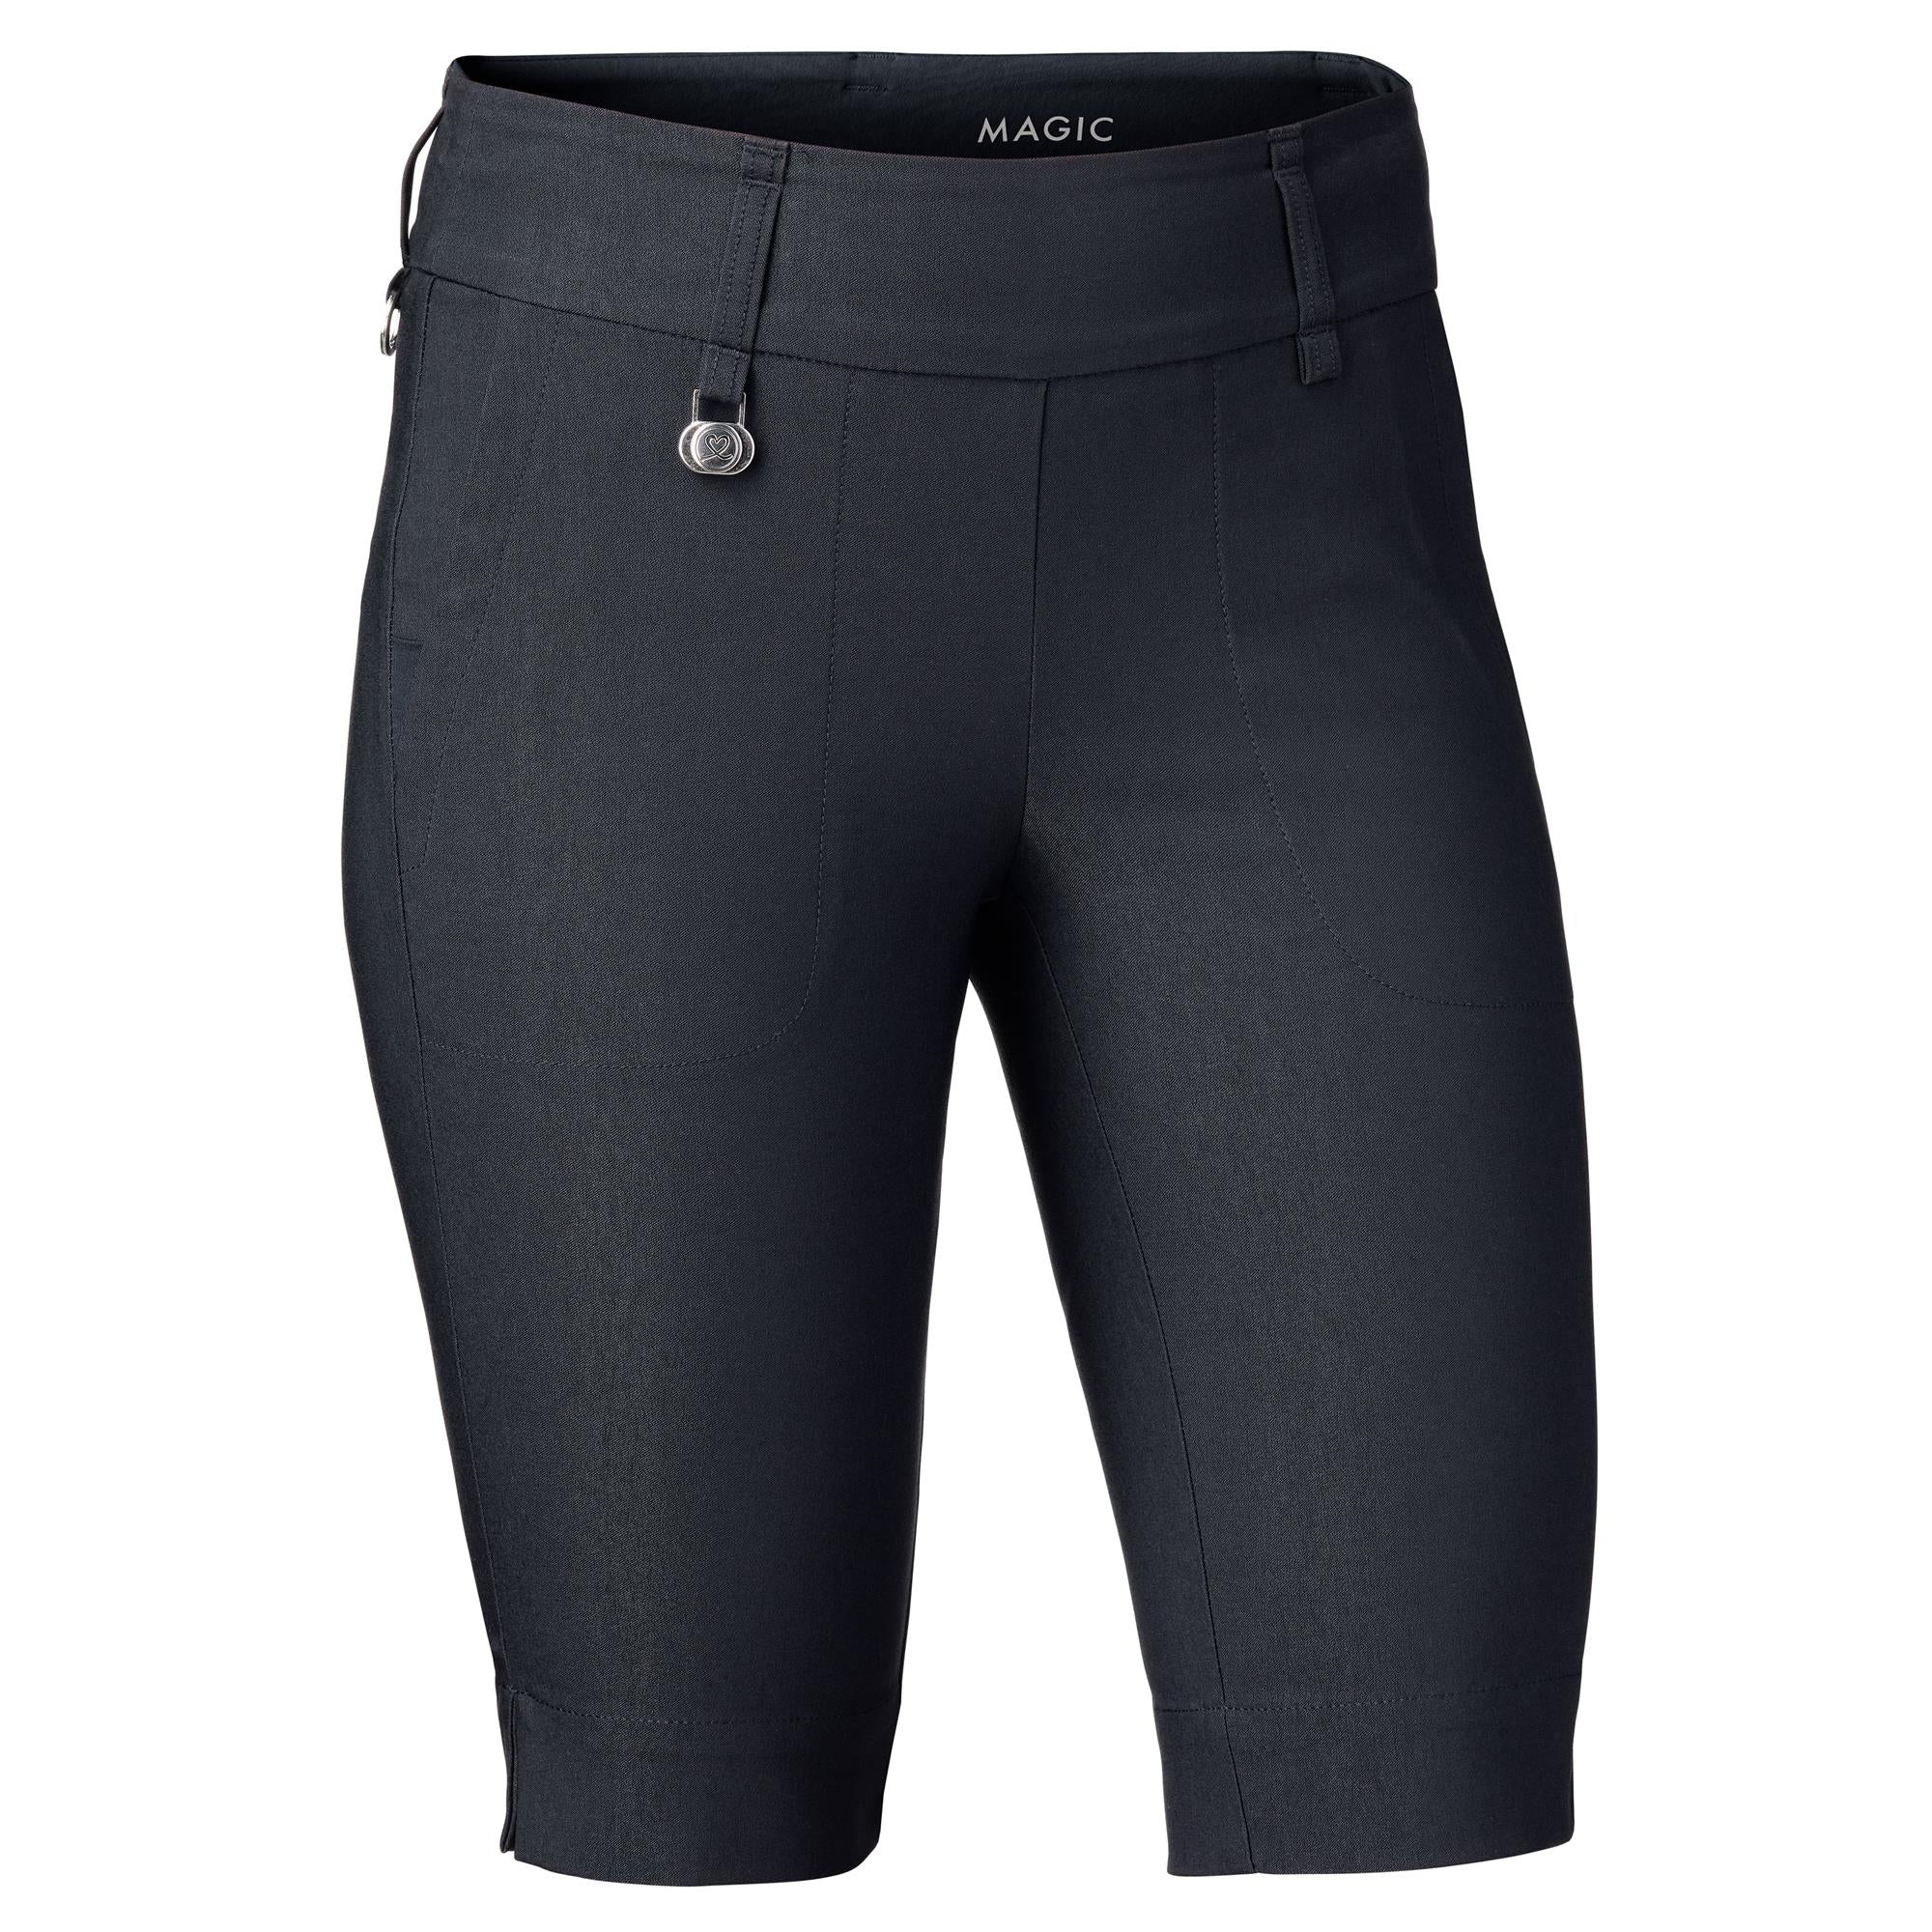 Röhnisch Chie Capri - Shorts Women's, Buy online